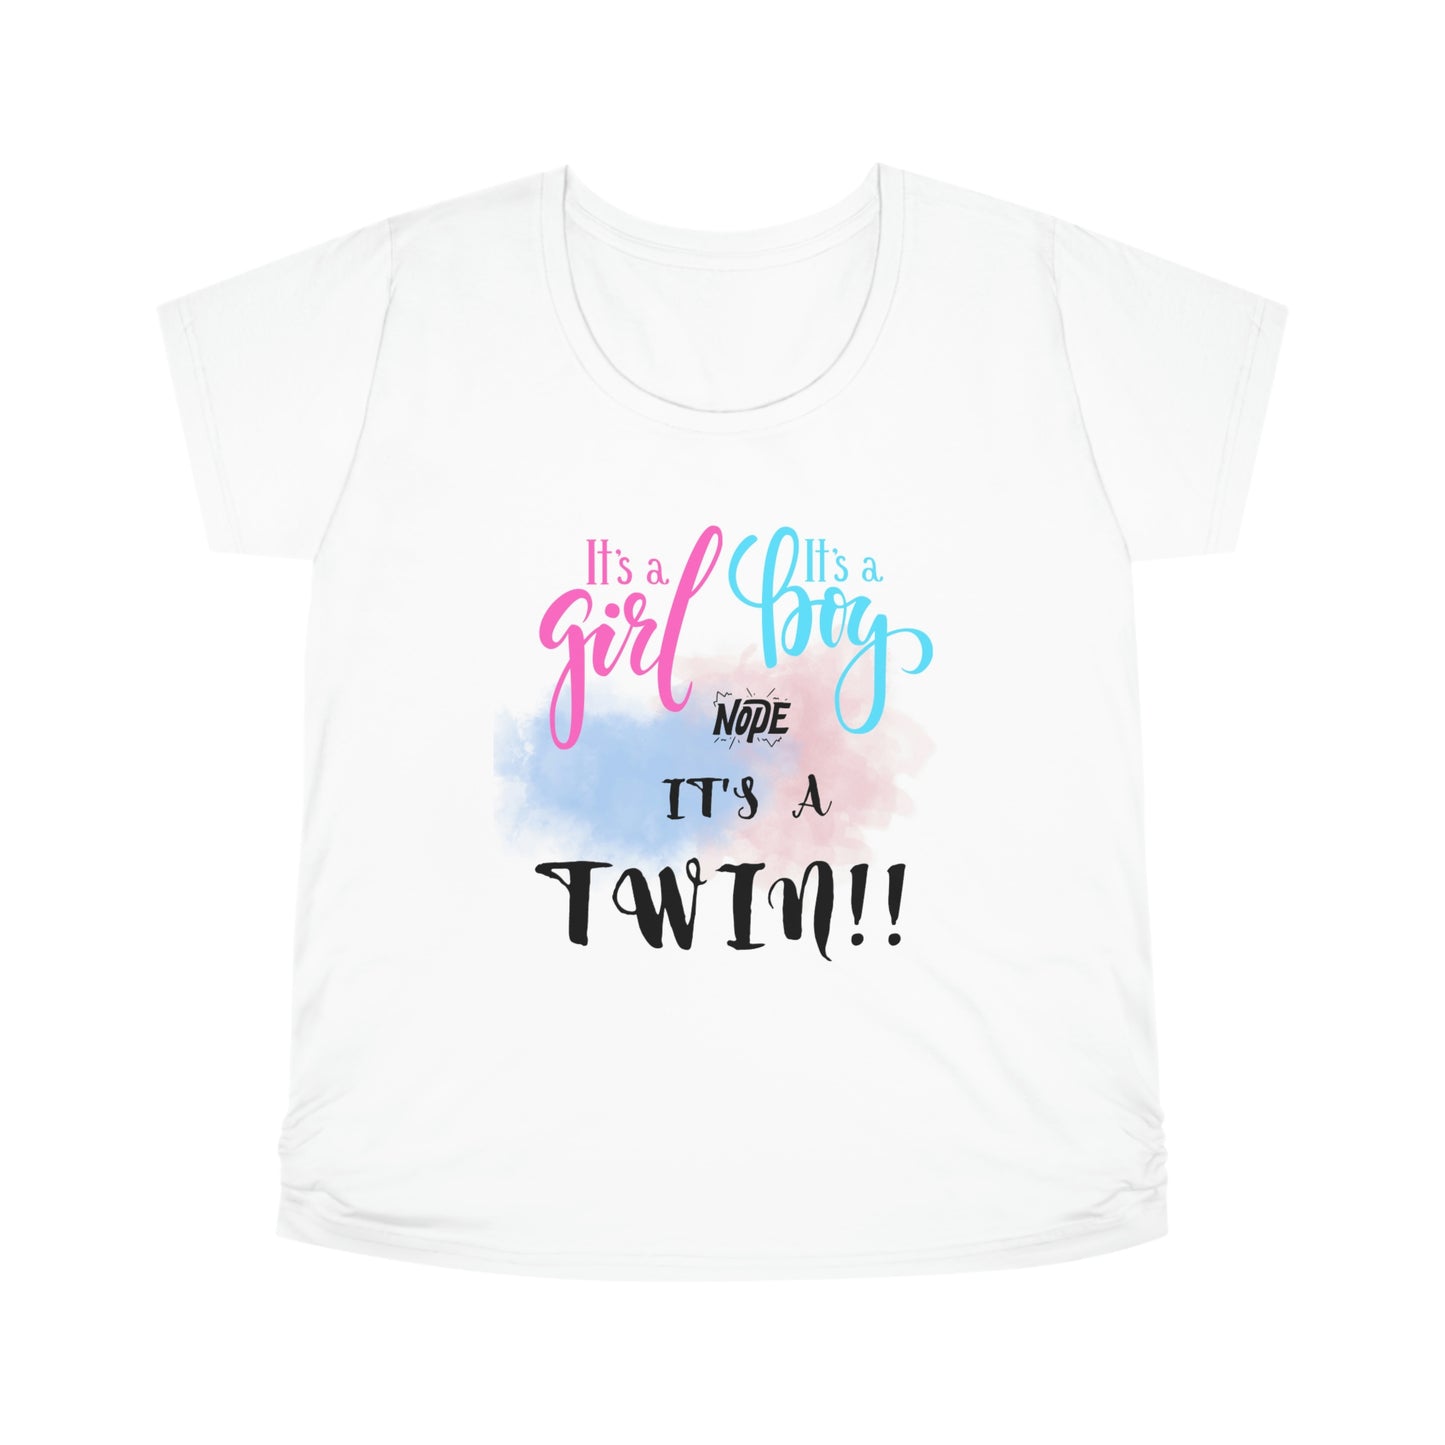 AVIONY Women's Maternity Twin Tea Shirt